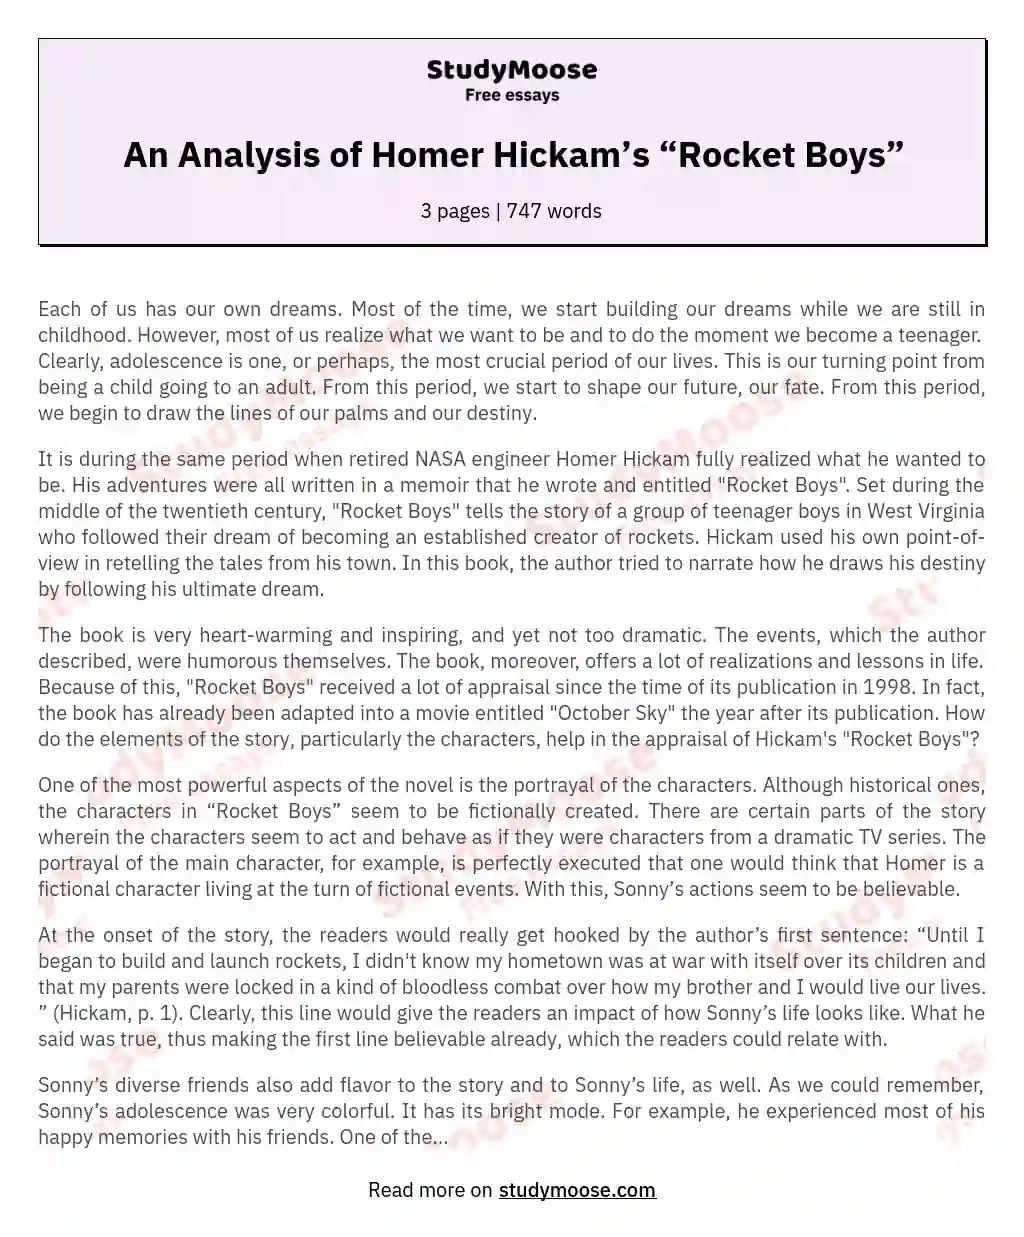 An Analysis of Homer Hickam’s “Rocket Boys”